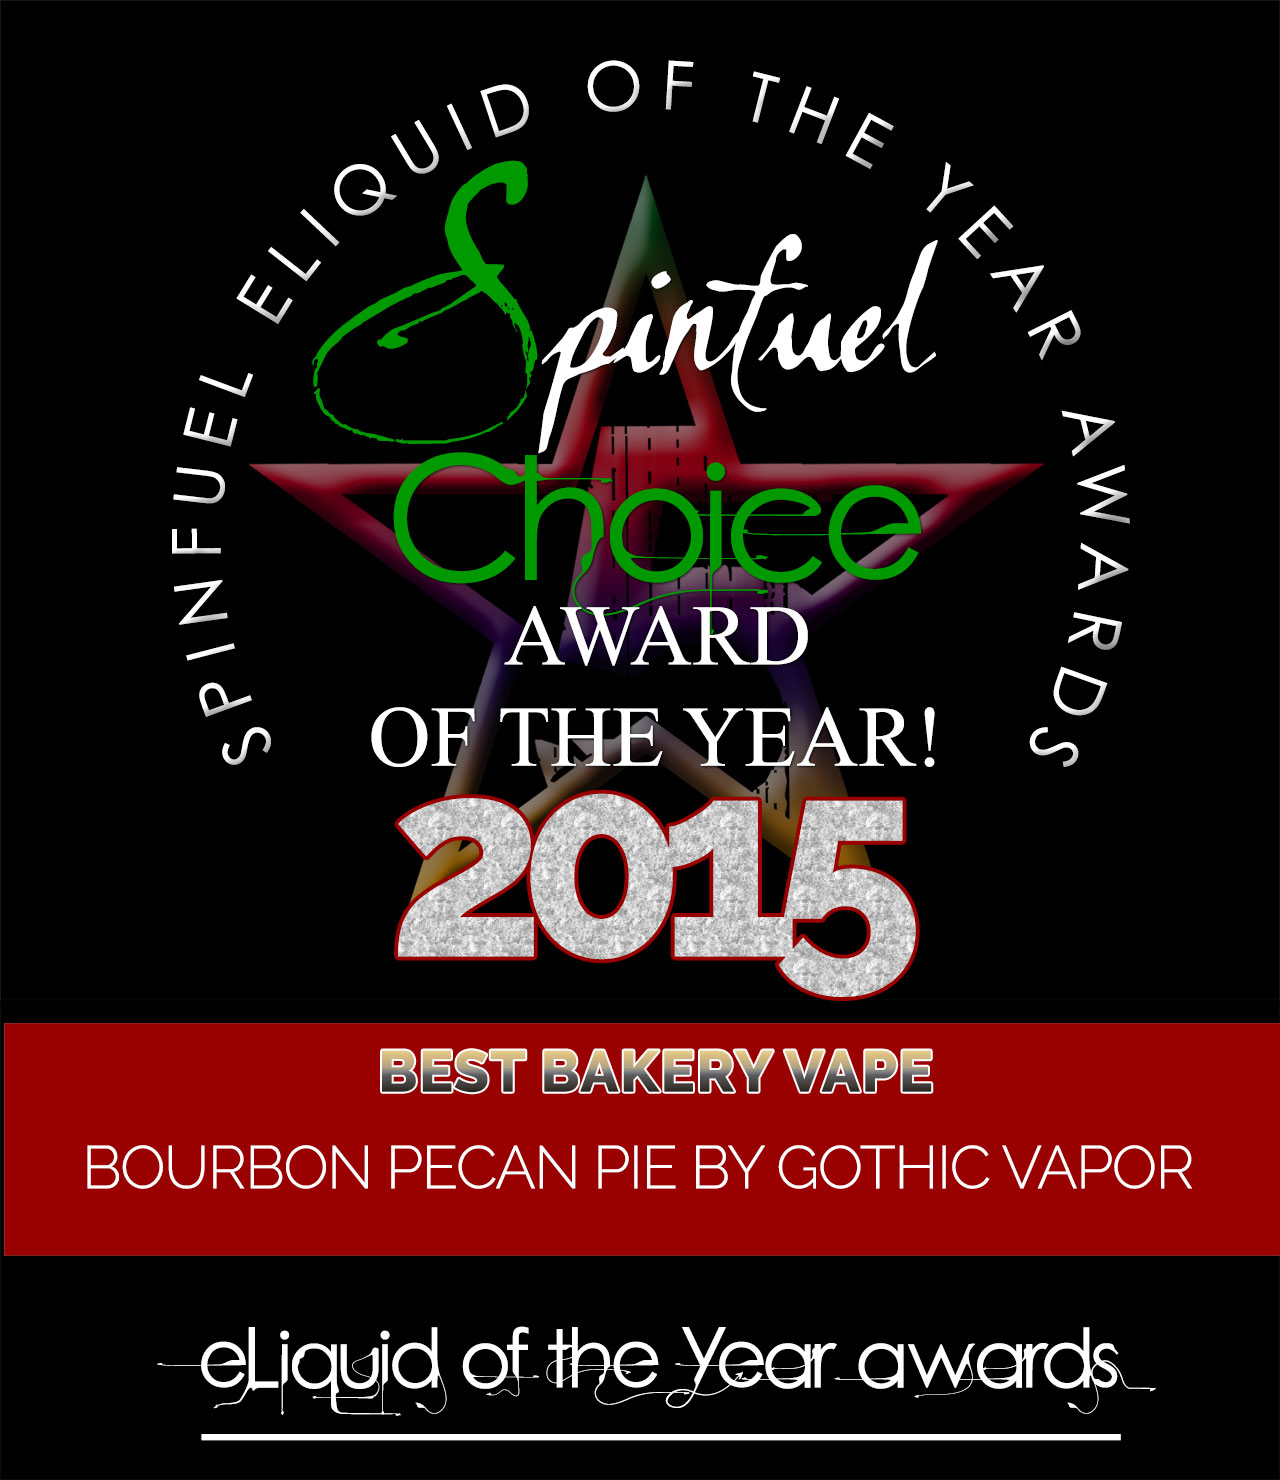 Gothic Vapor - Spinfuel Choice Award 2015